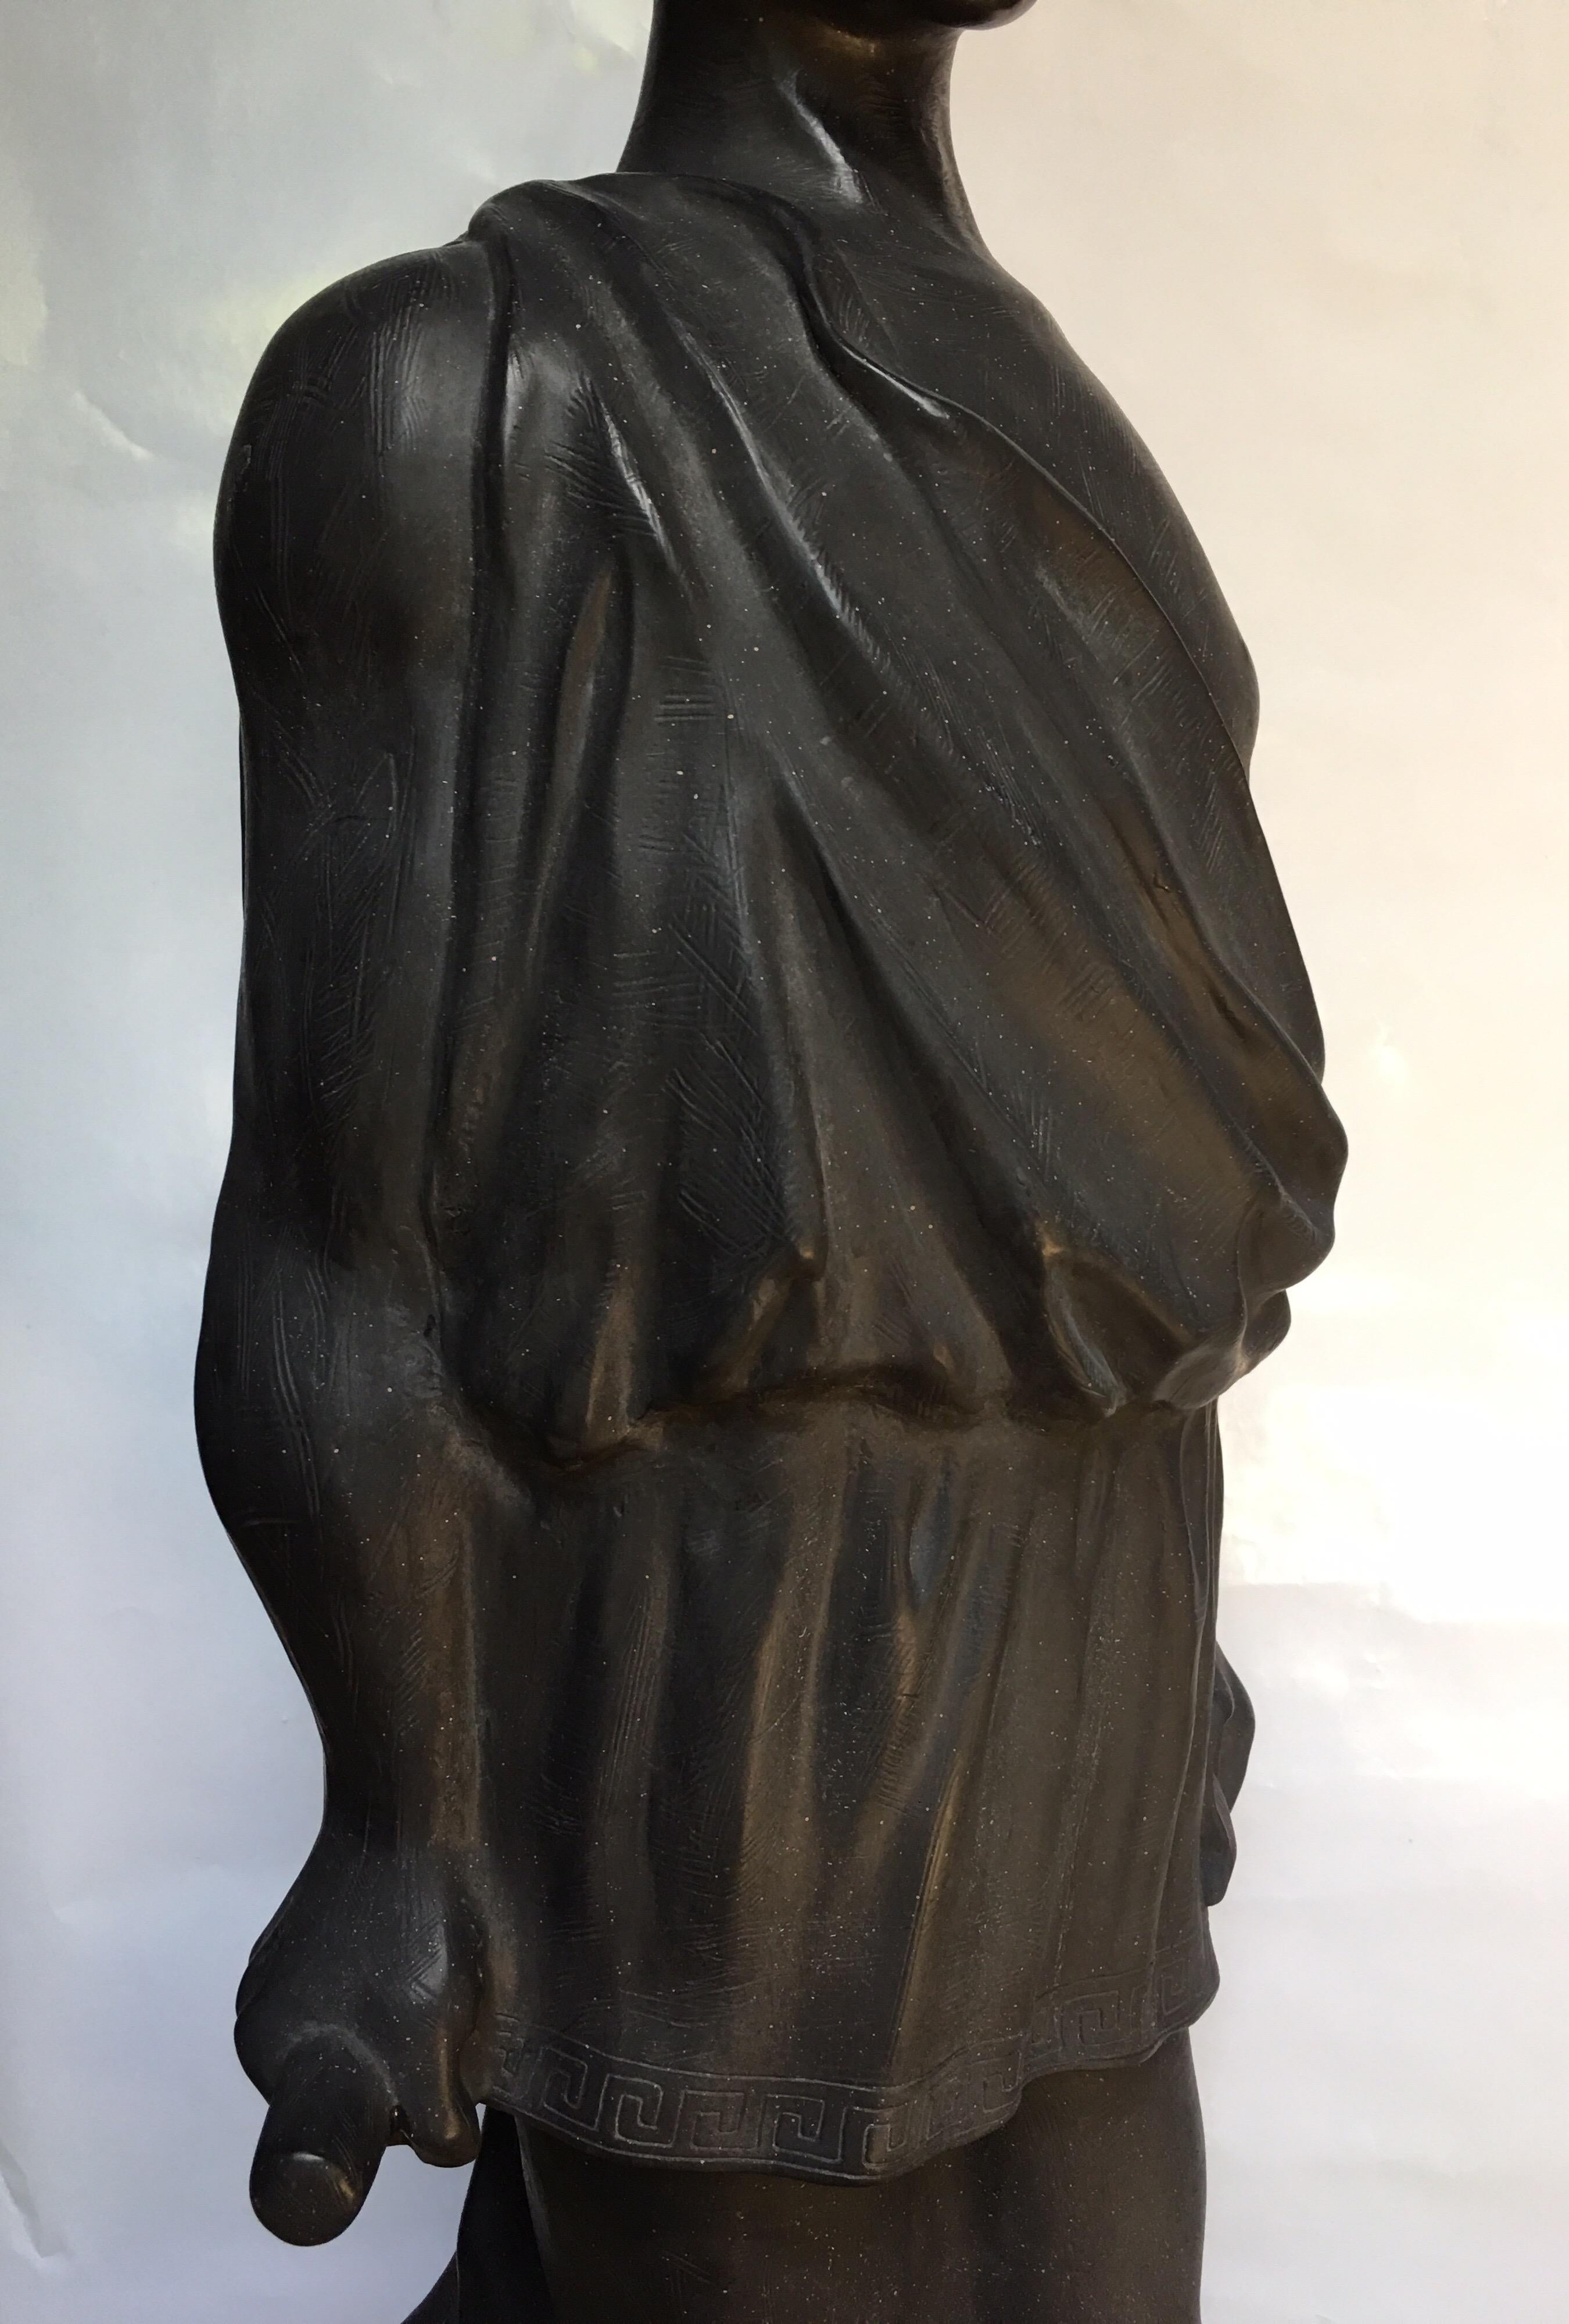 Neoclassical Draped Roman Male Sculpture Figure with Greek Key Motif 3